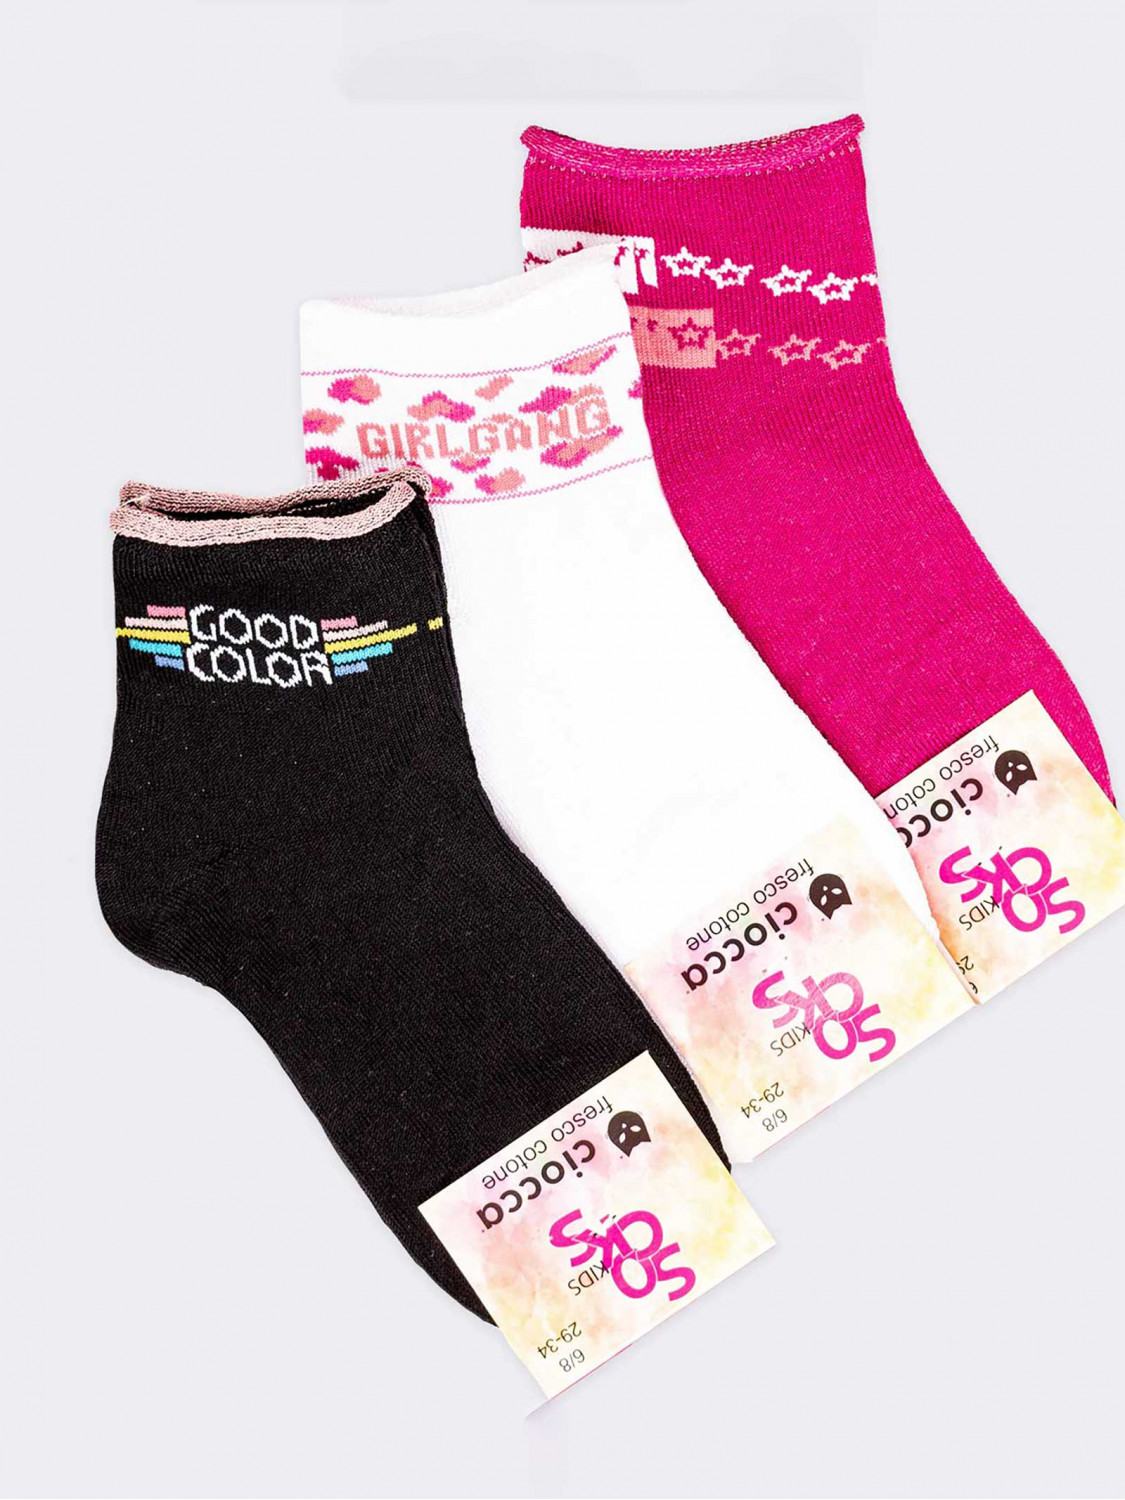 Tris Good color, Girl gang, stars pattern Kids Crew Socks